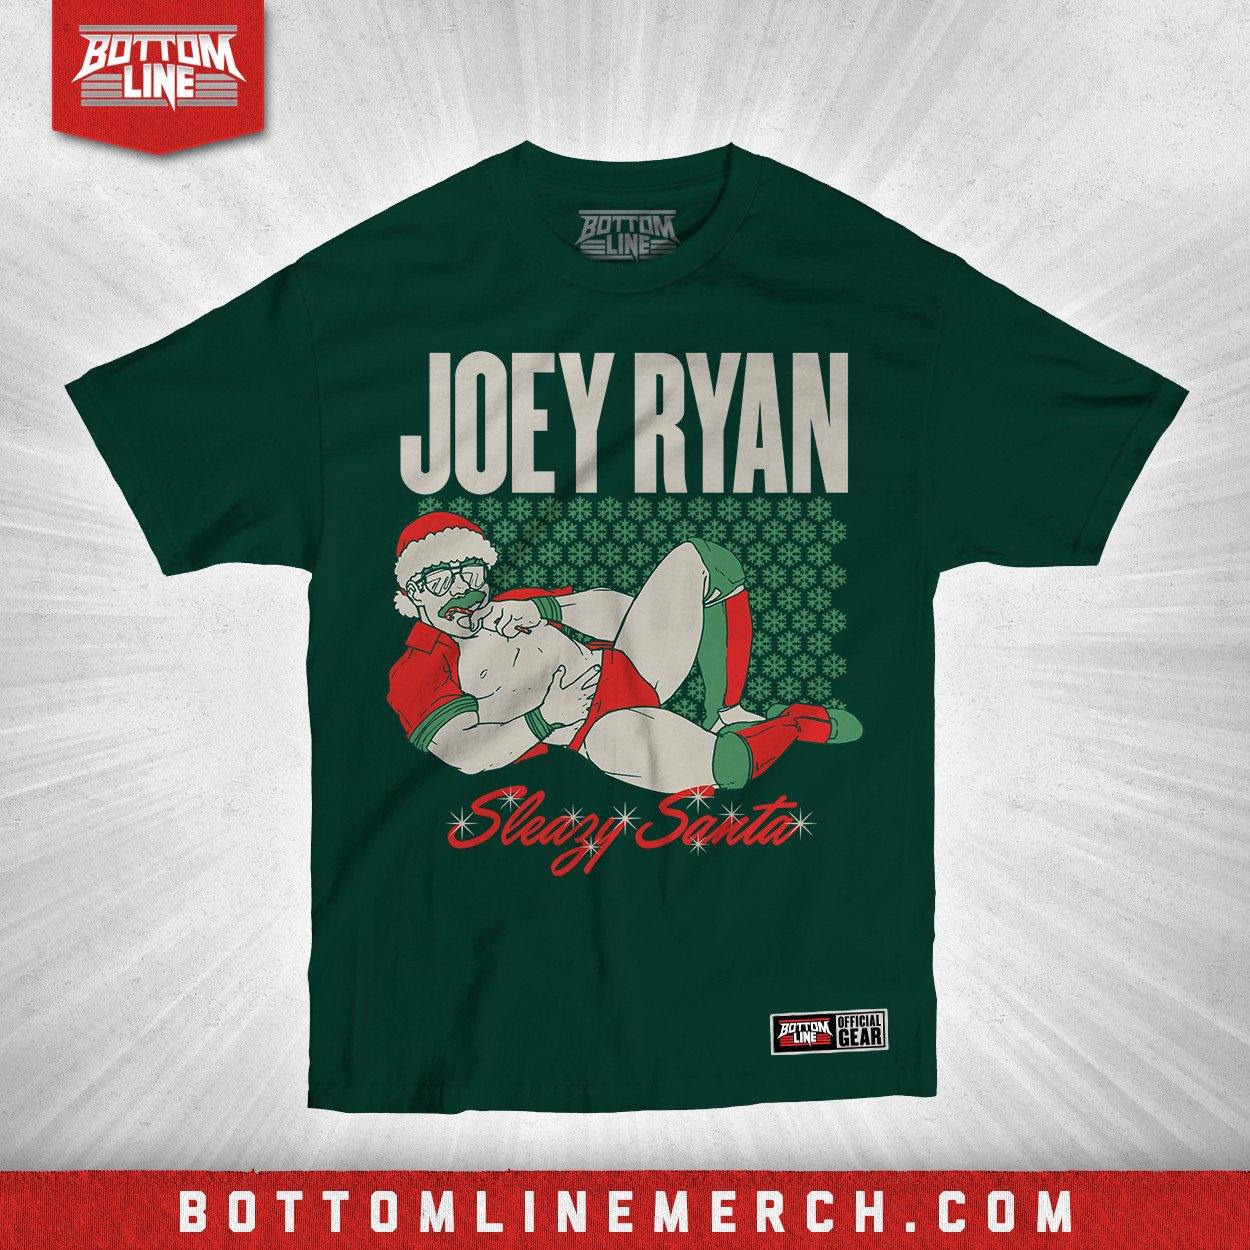 Buy Now – Joey Ryan "Sleazy Santa" Shirt – Wrestler & Wrestling Merch – Bottom Line